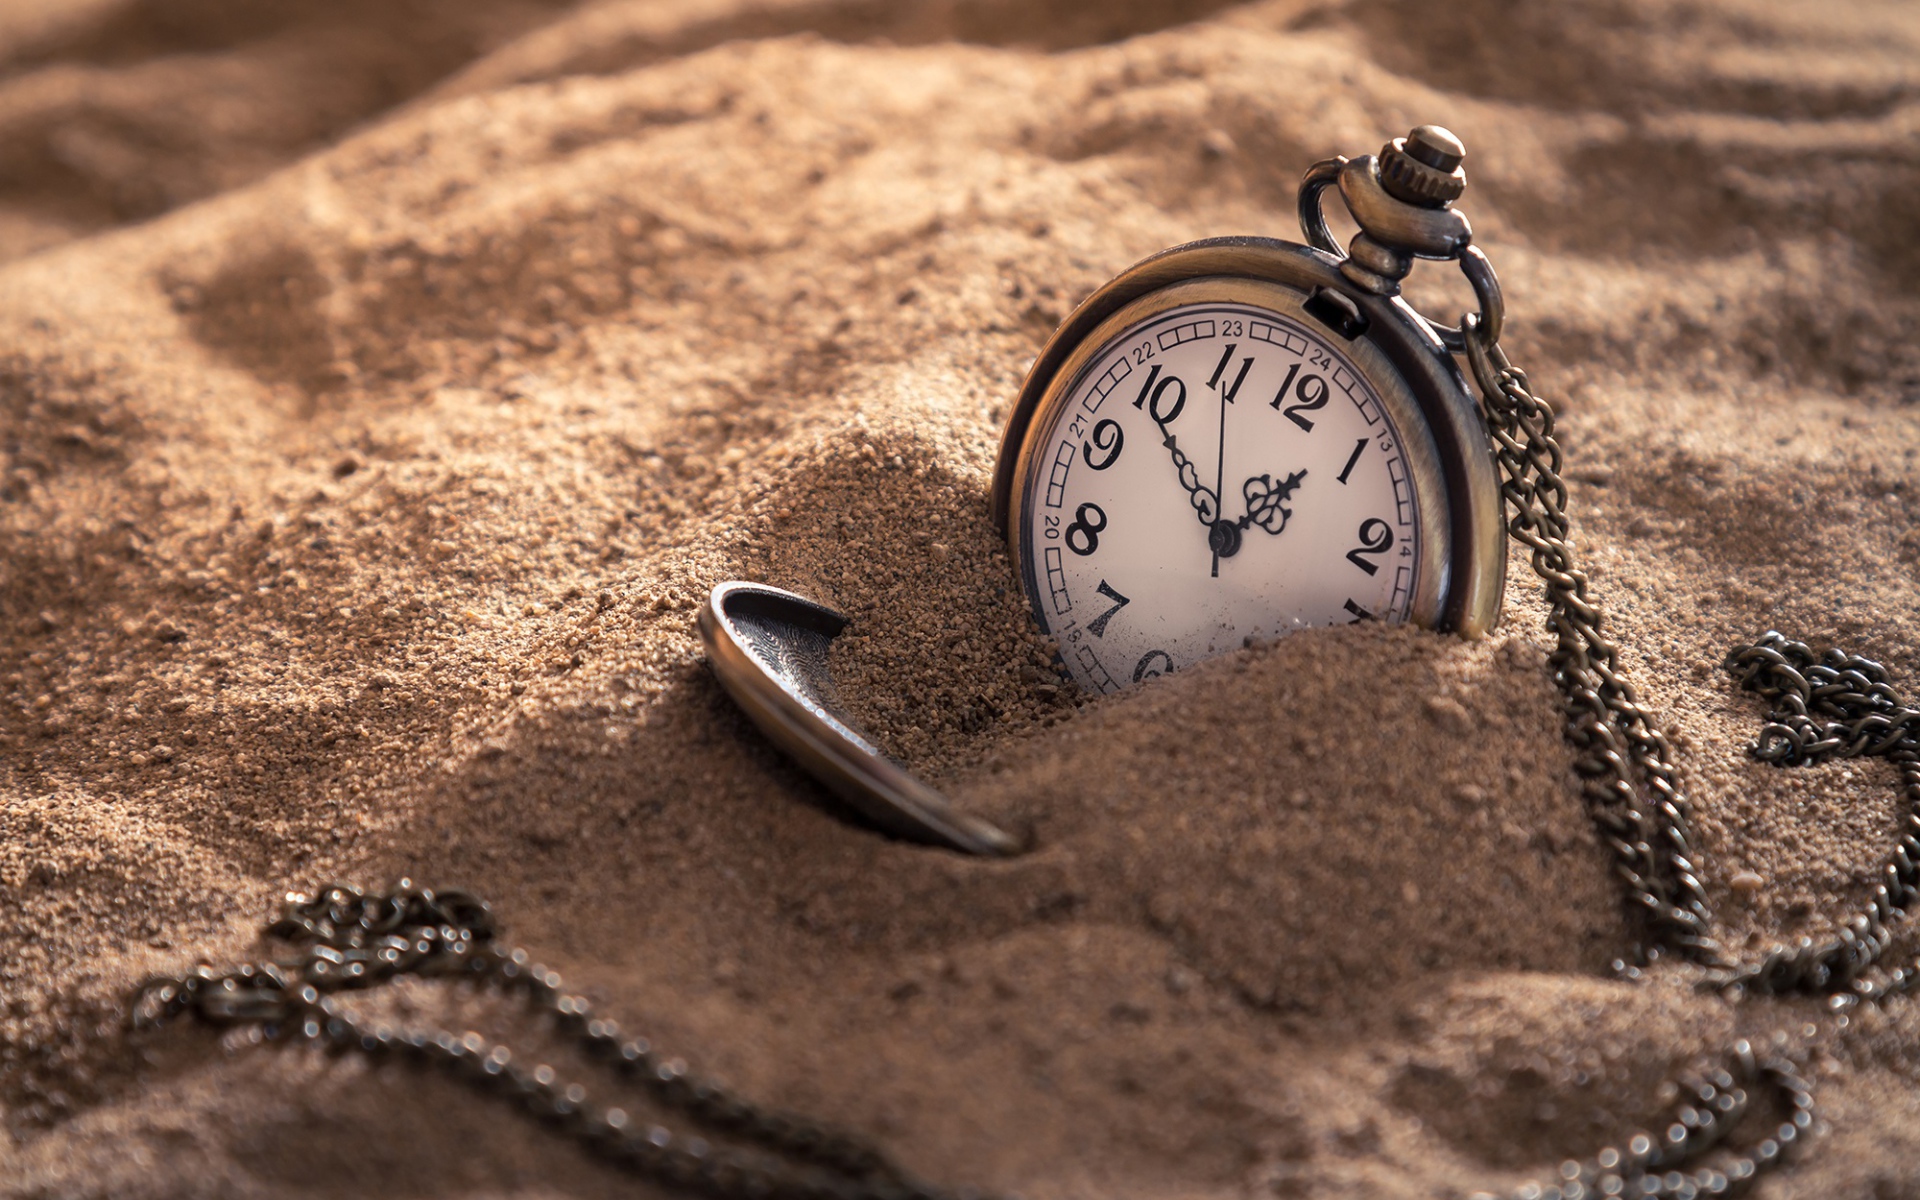 старинные часы на цепочке в песке, Creative Wallpaper, Pocket watch on a chain in the sand